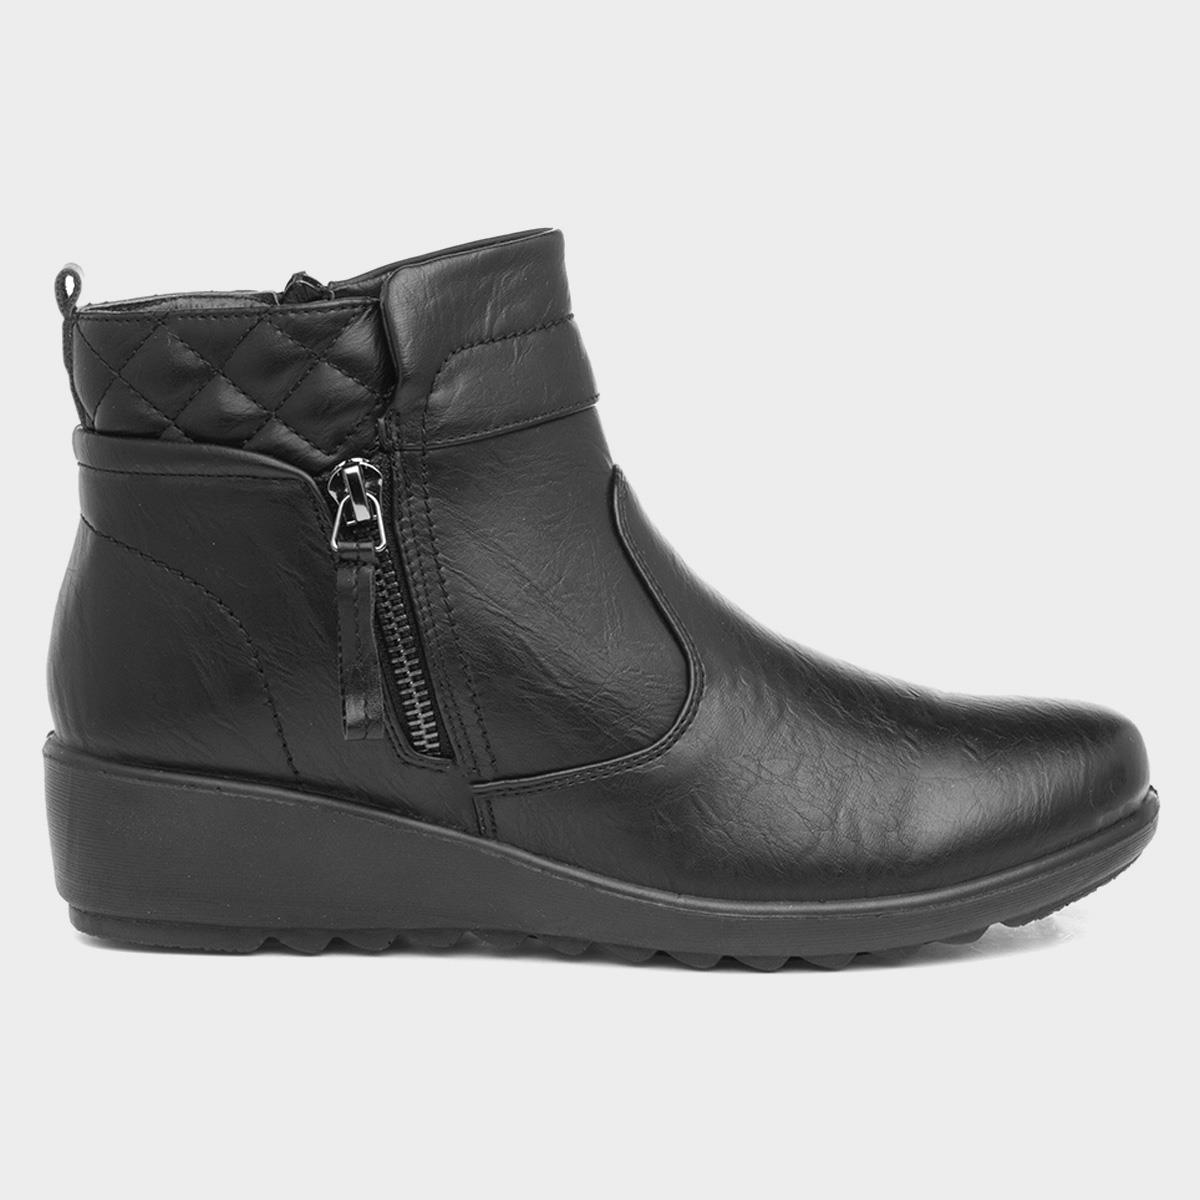 Cushion Walk Klara Womens Black Ankle Boot-184059 | Shoe Zone